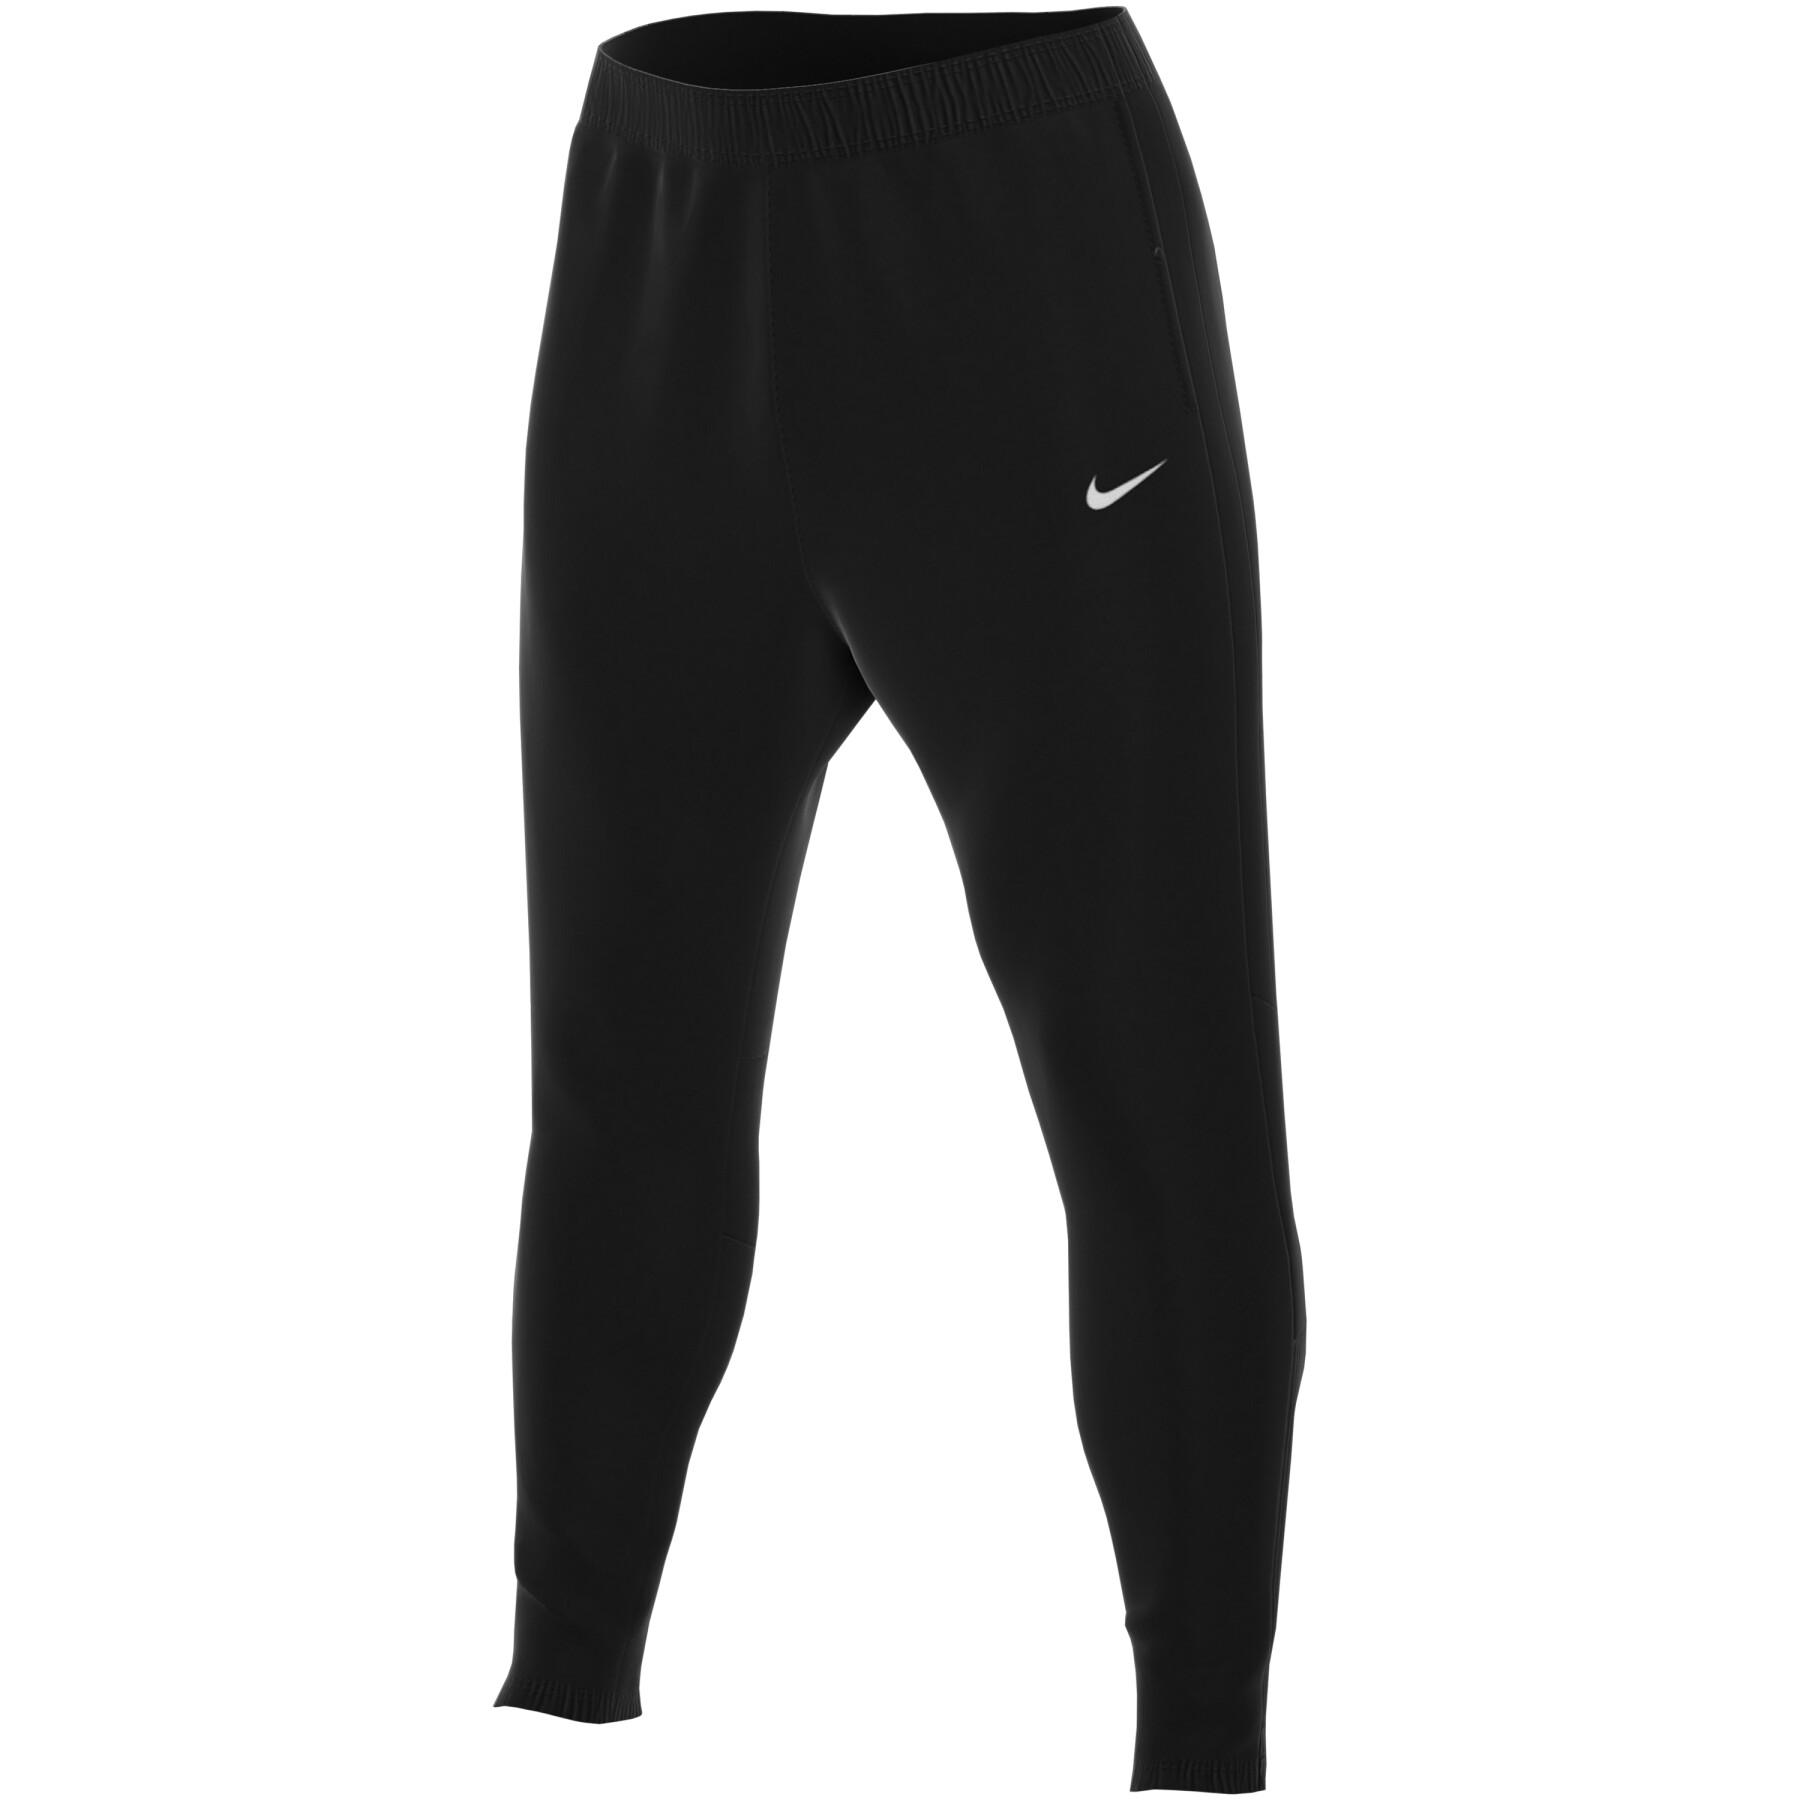 Jogging Nike Dri-FIT Challenger - Nike - Men's running shoes